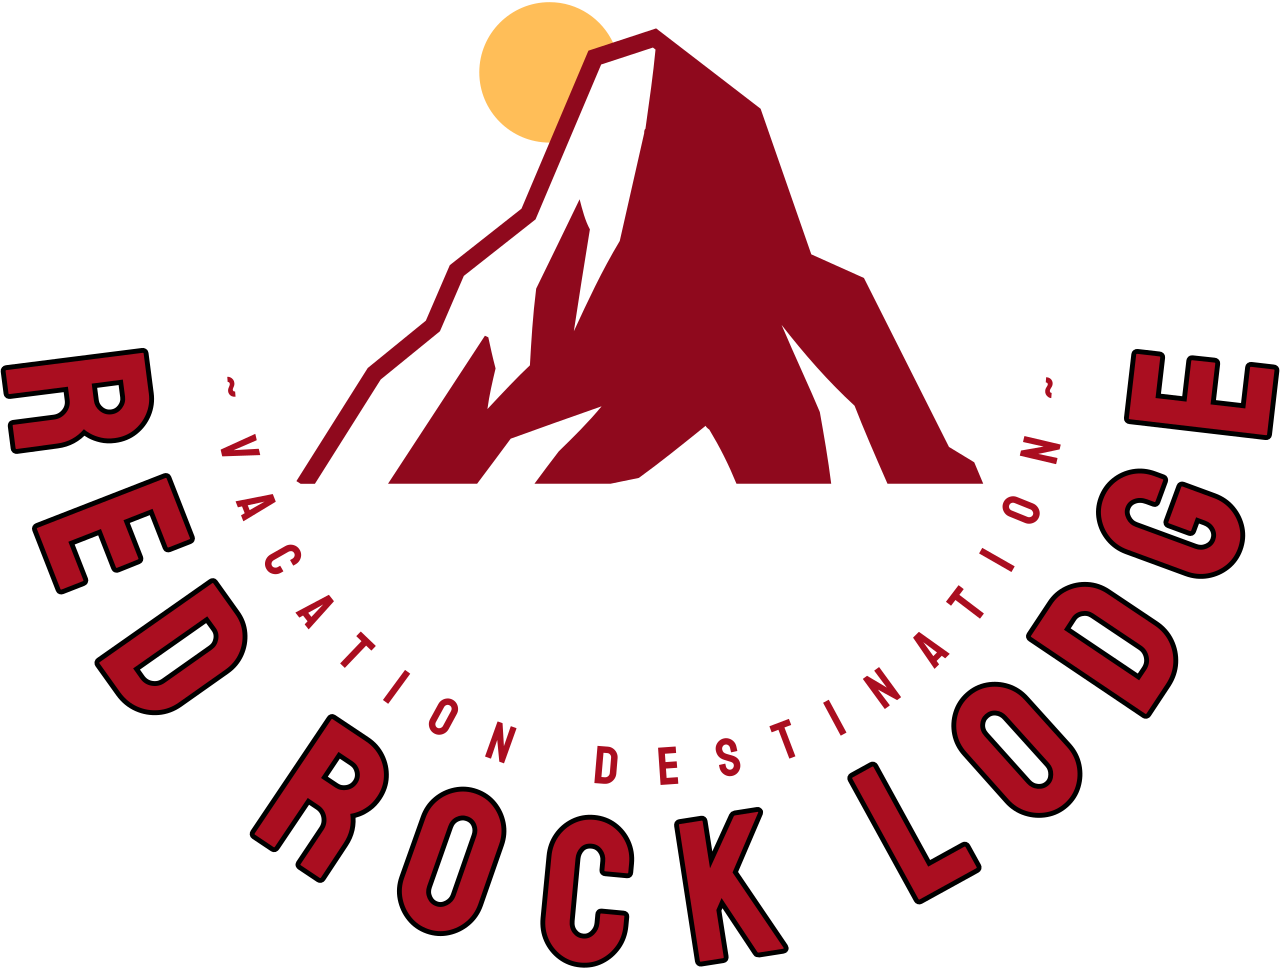 Red Rock Lodge's logo